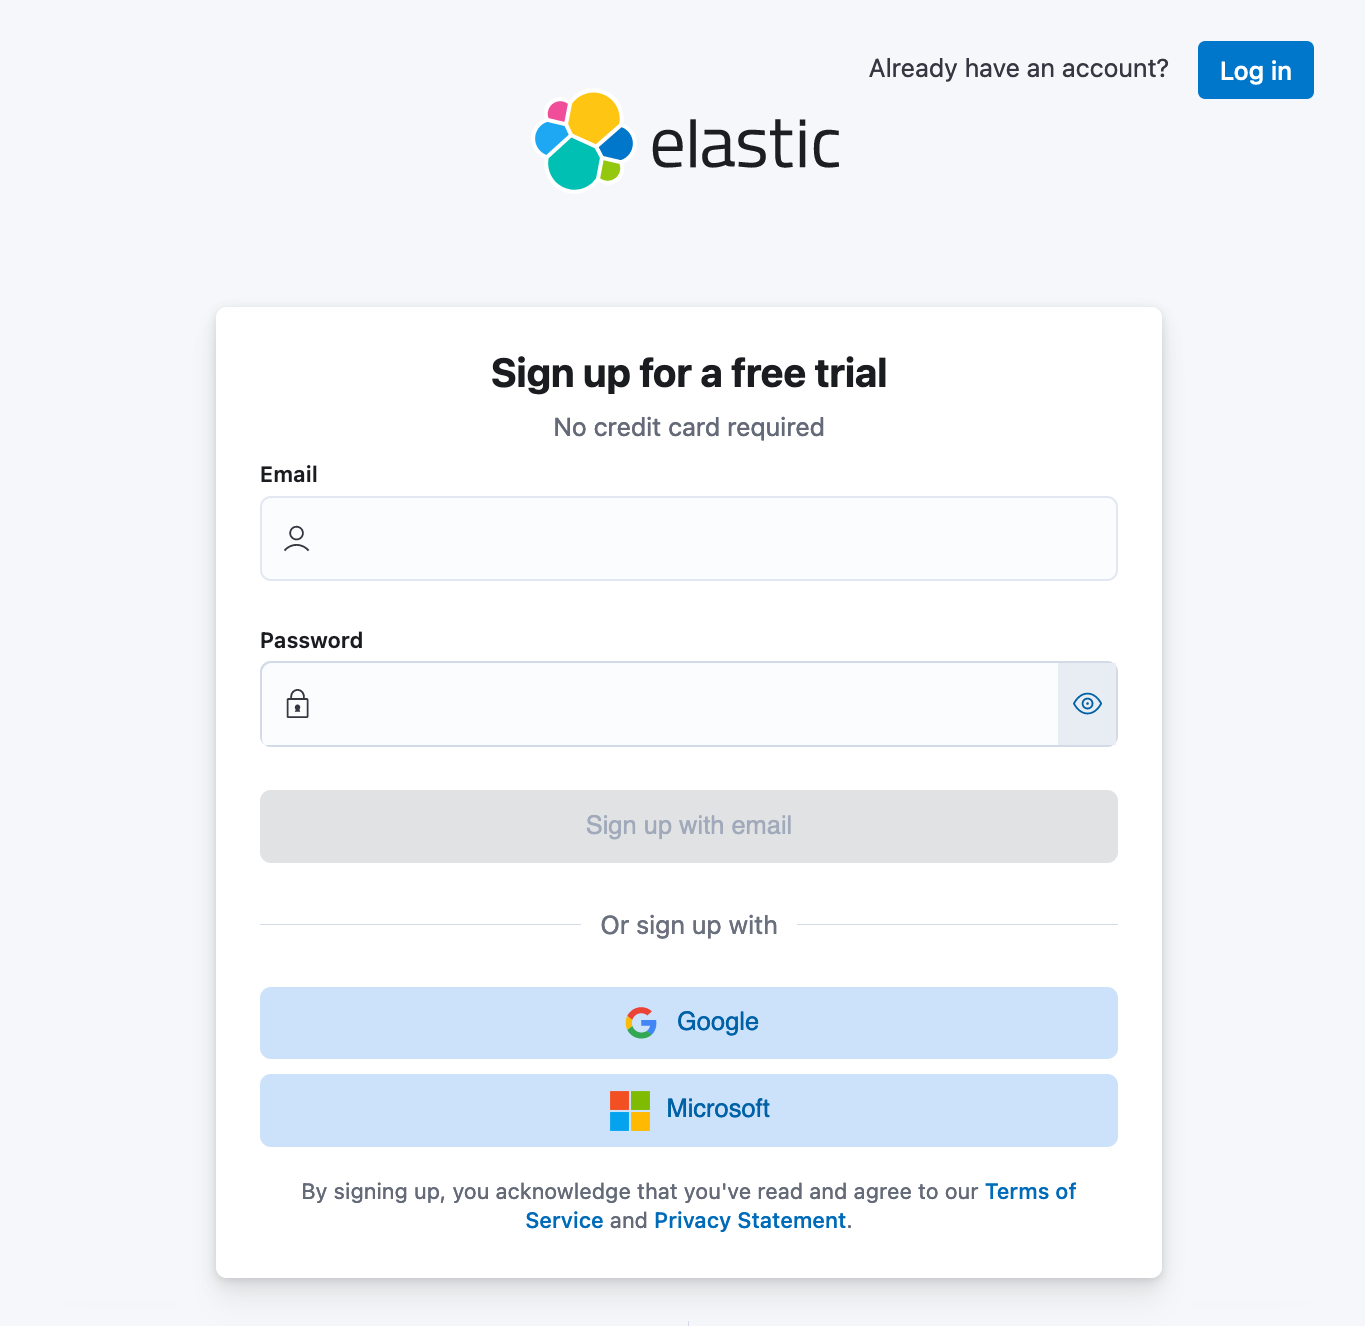 elastic cloud free trial sign up